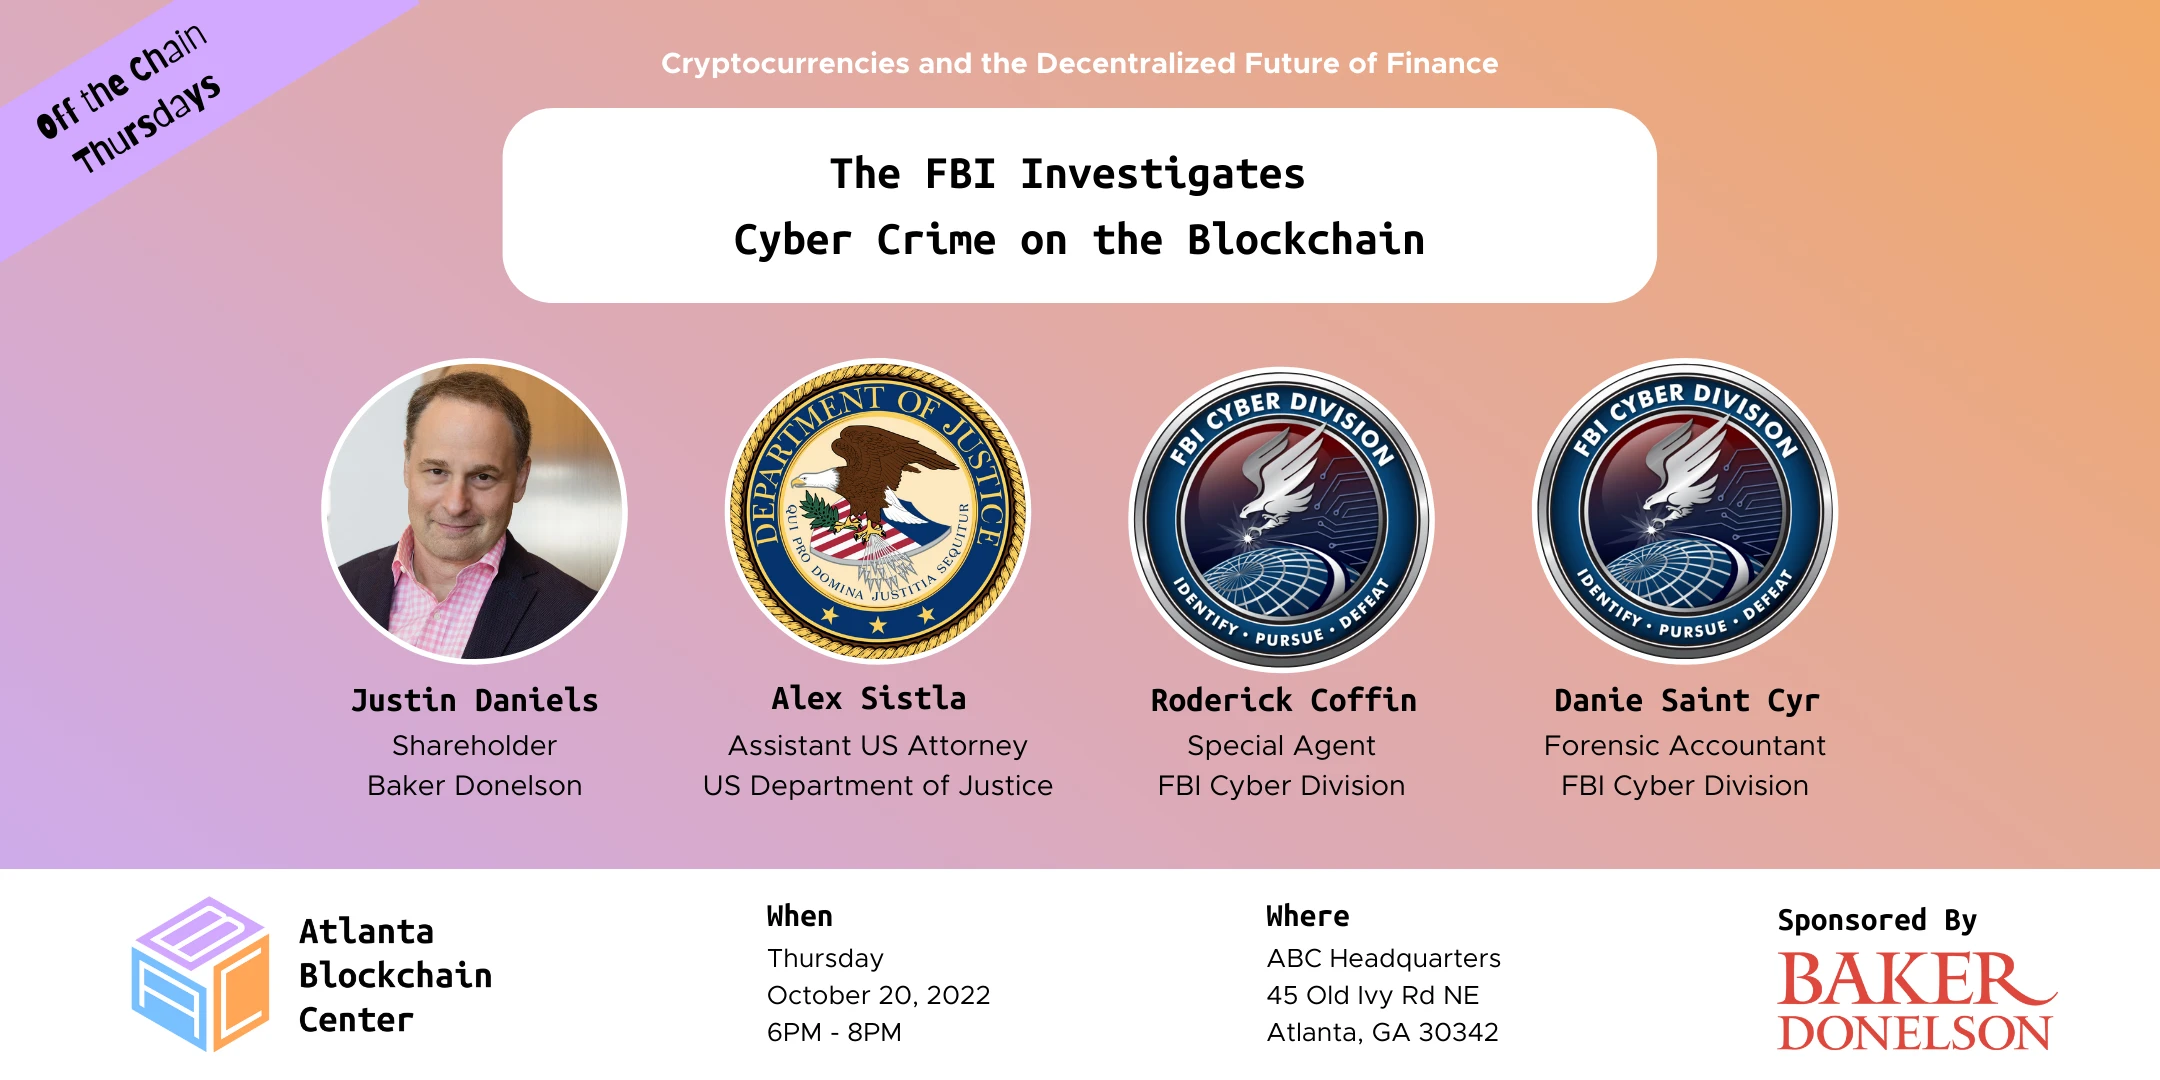 The FBI Investigates Cyber Crime on the Blockchain